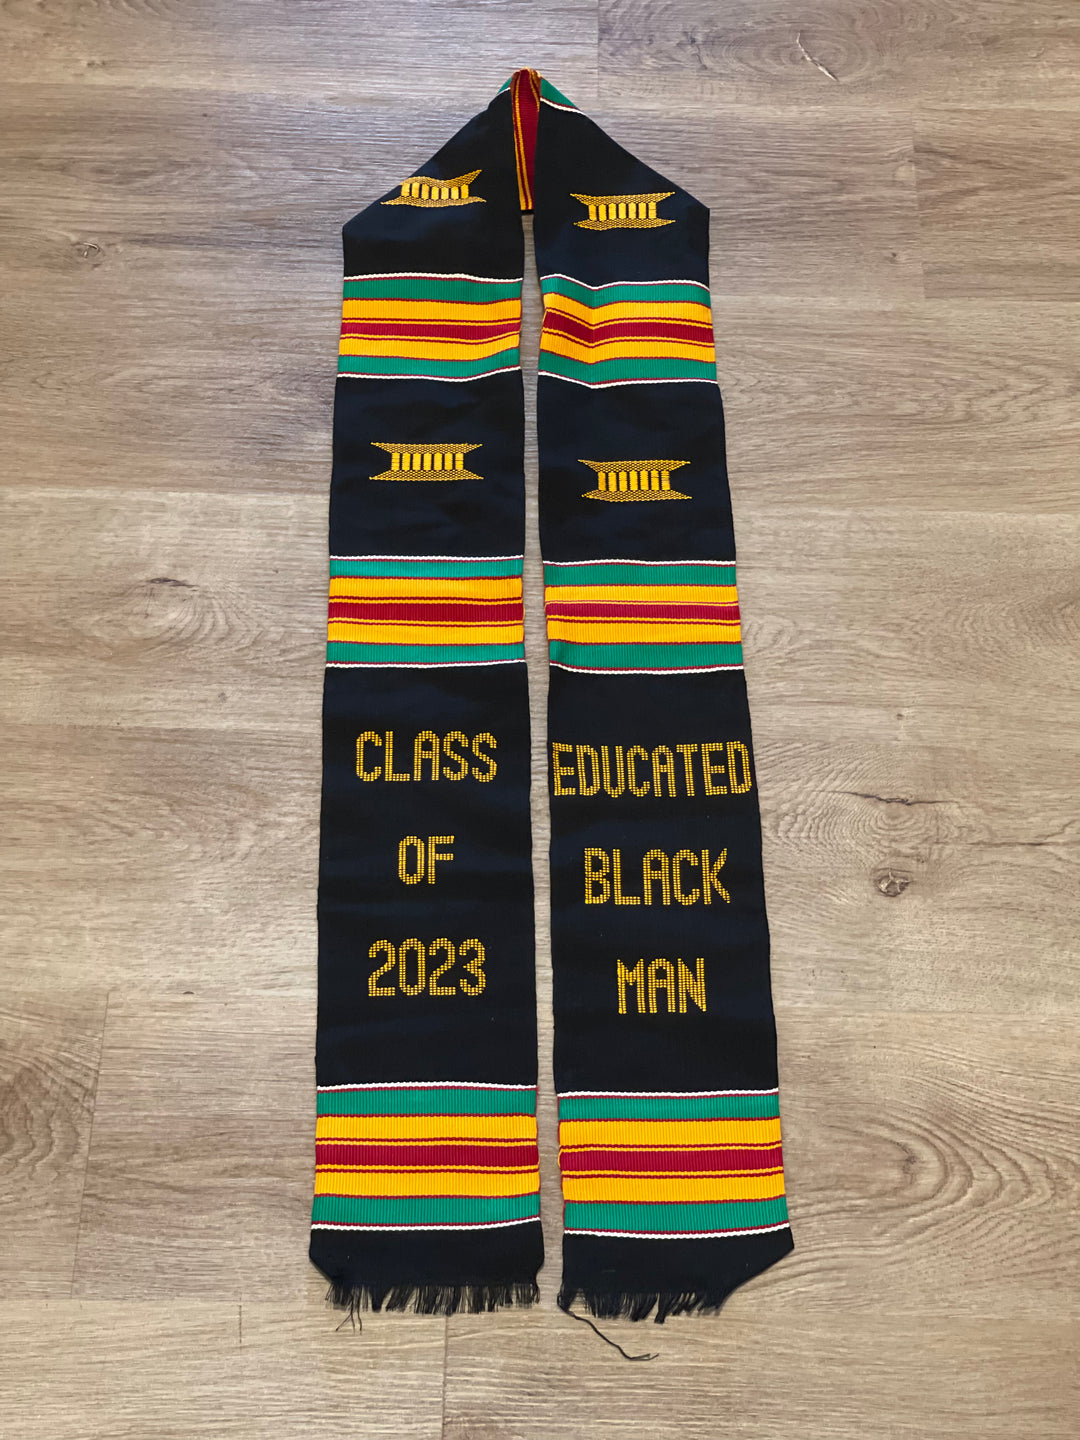 Educated Black Man Kente Cloth Graduation Stole w/ Garment Care Bag